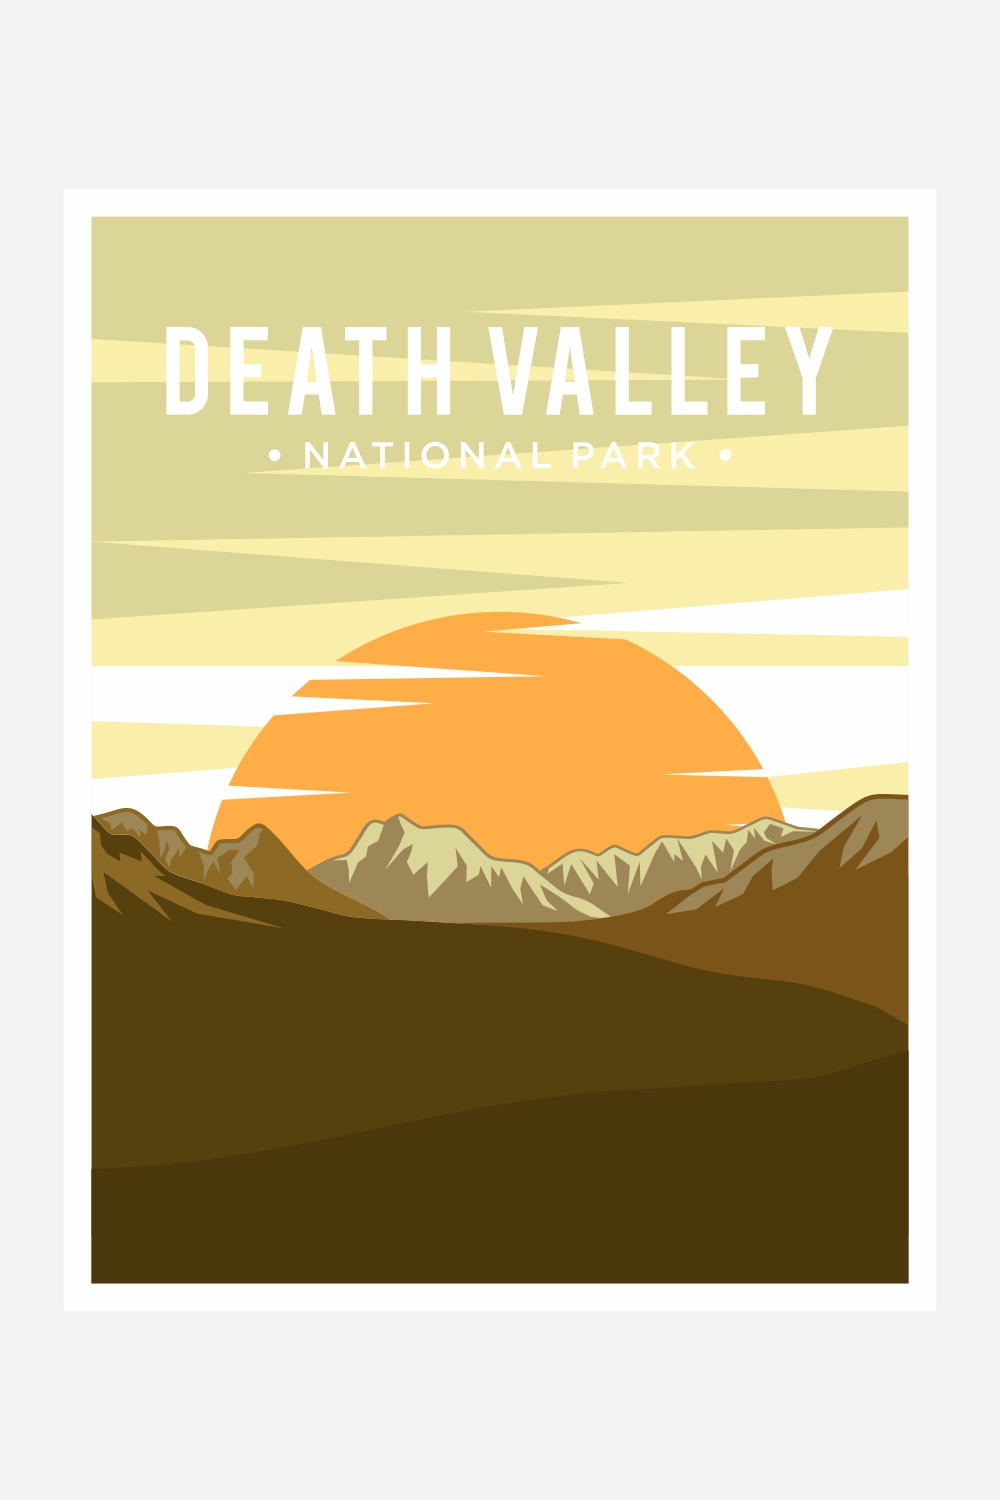 Death Valley National Park poster vector illustration design – Only $8 pinterest preview image.